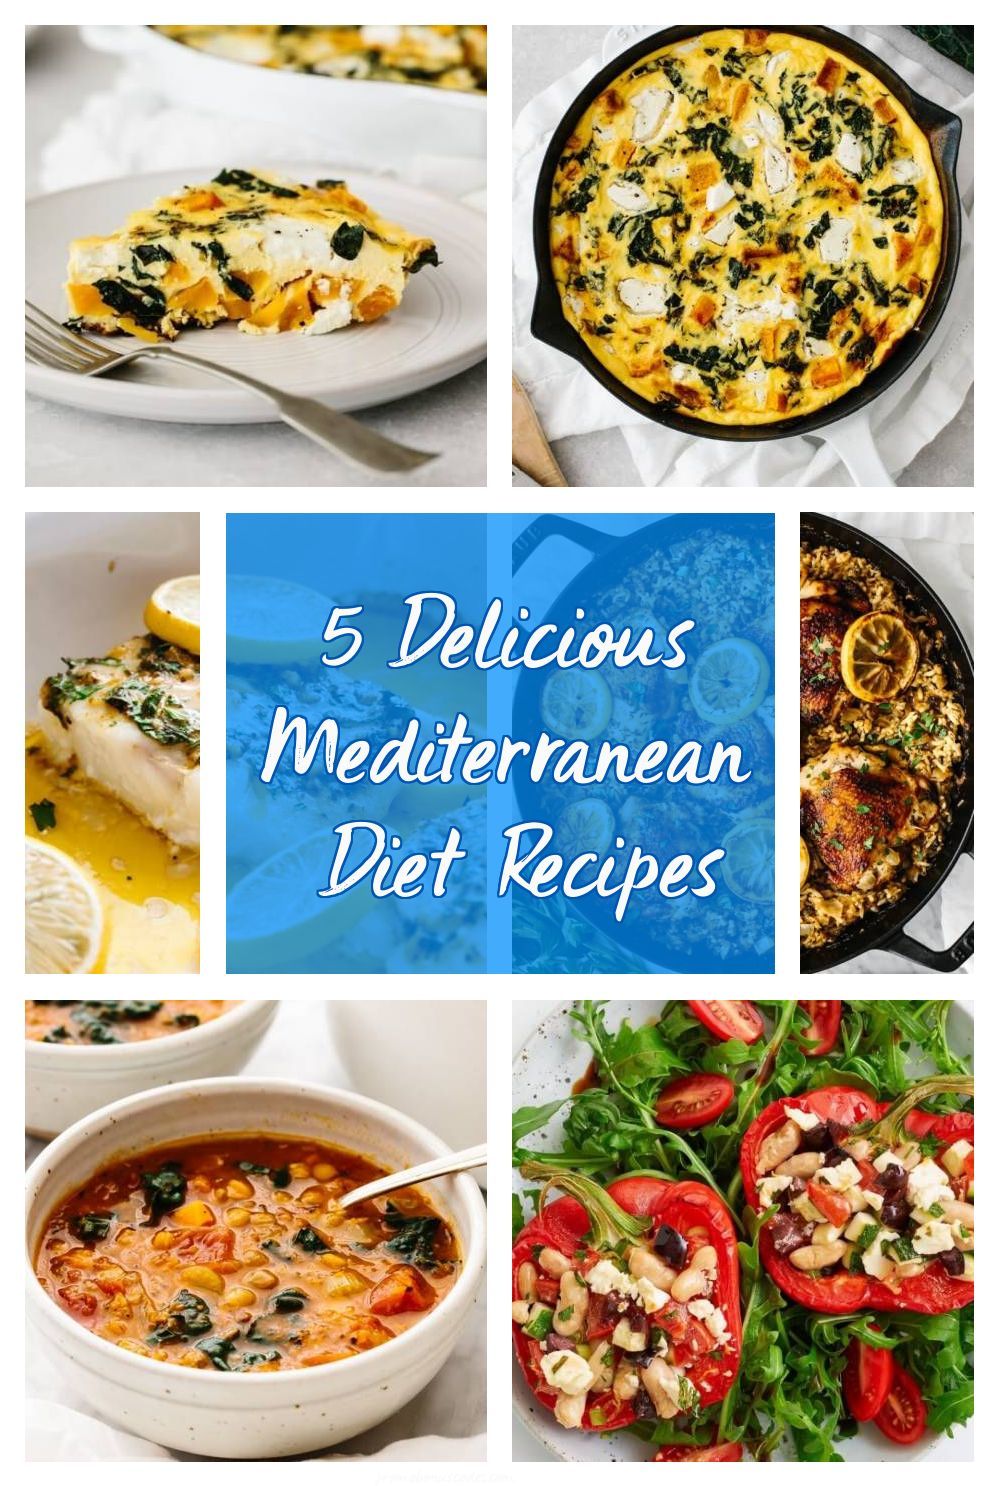 5 Delicious Mediterranean Diet Recipes